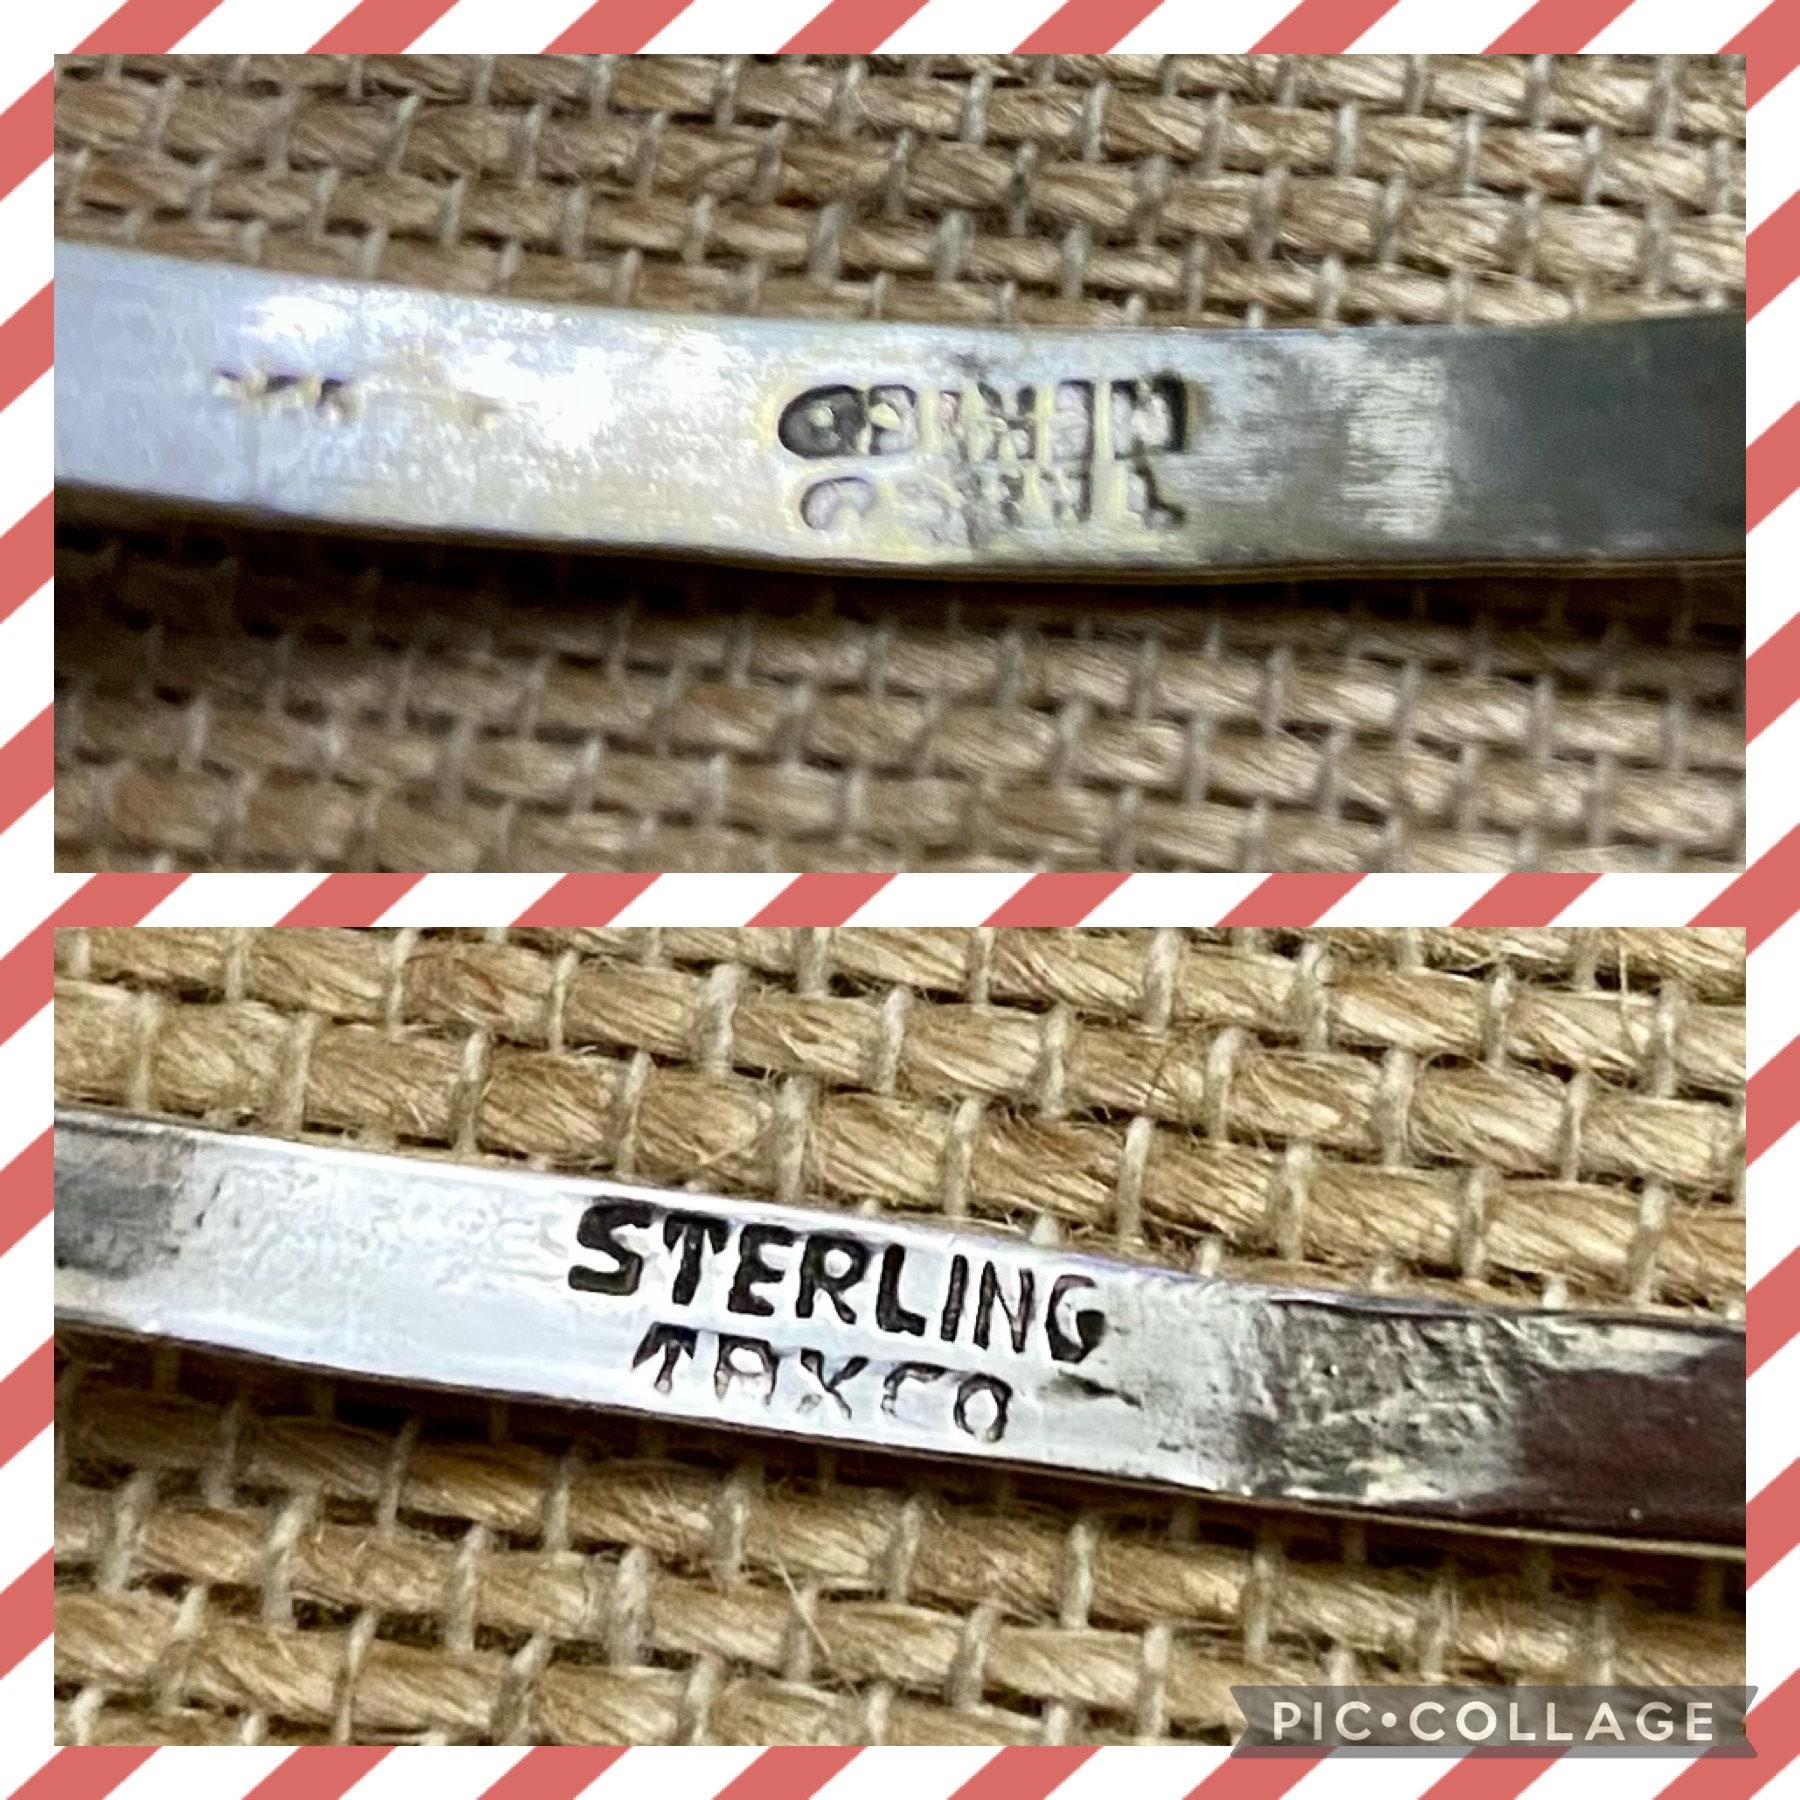 Vintage Taxco Sterling Silver Stackable Bangle Bracelets 925 set of 2 –  mainstjewelrywatches